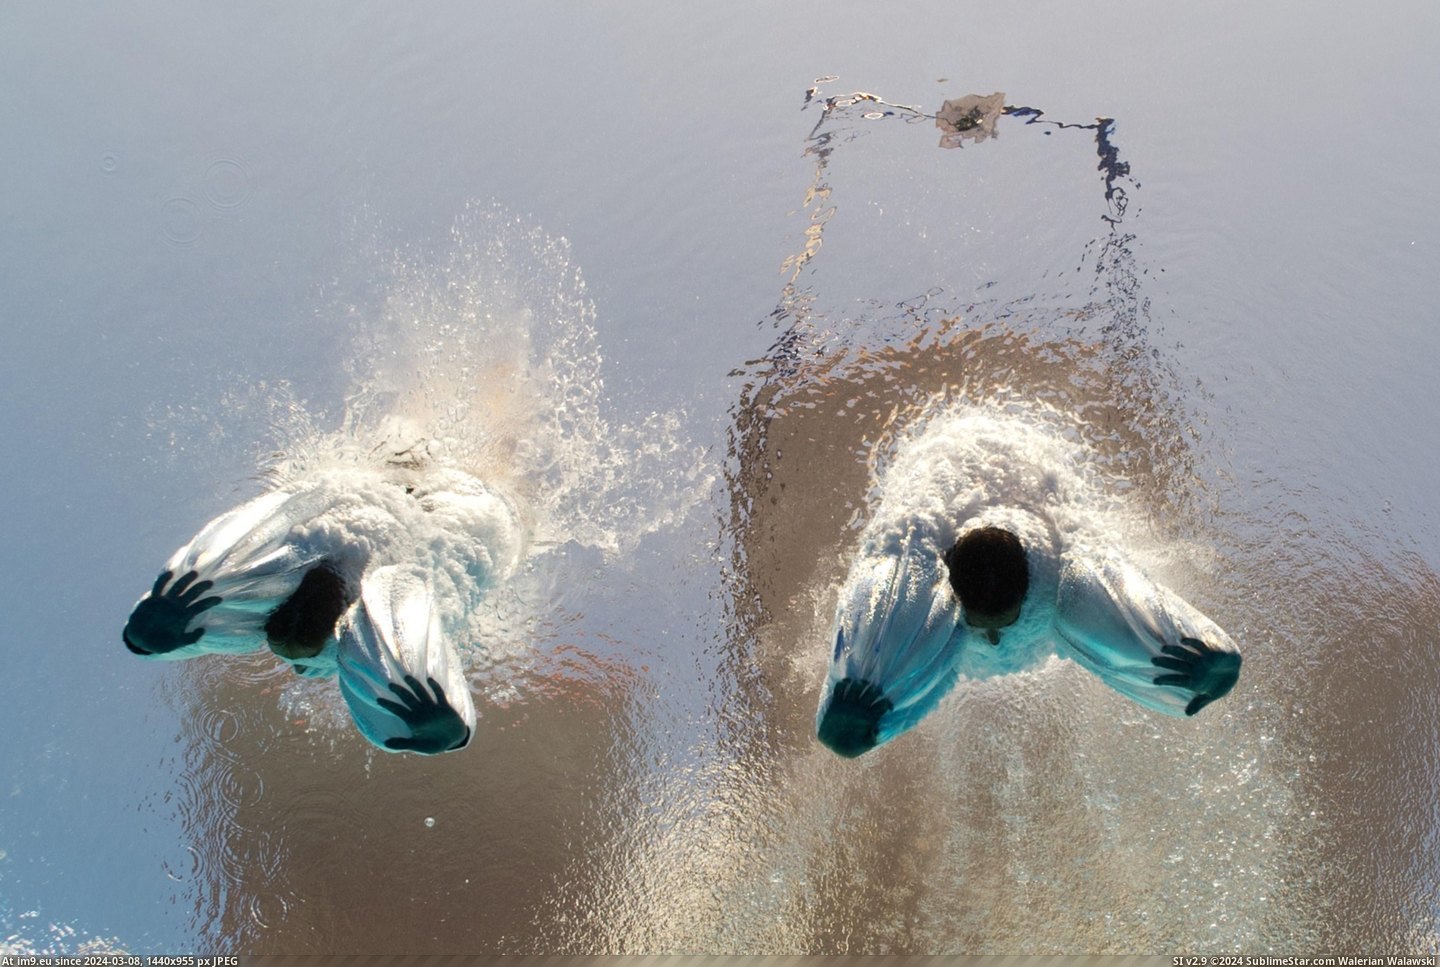  #Splash  [Pics] After the splash Pic. (Bild von album My r/PICS favs))